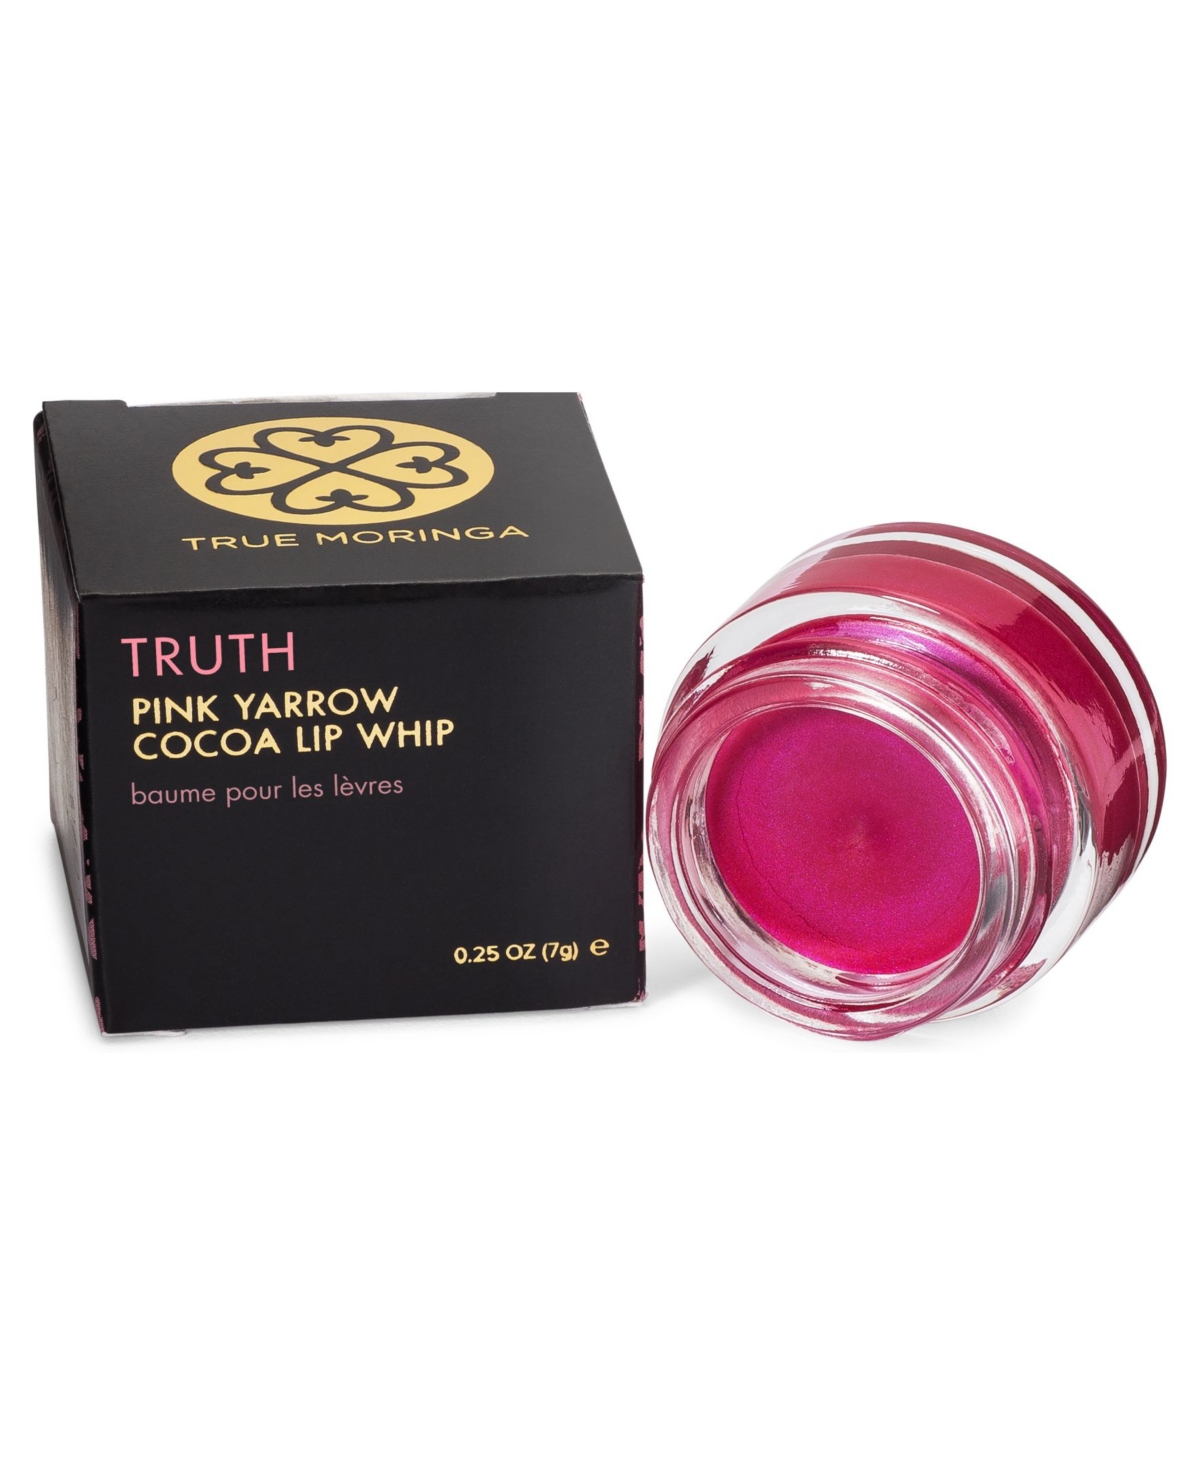 Moisturizing Shimmer Pink Yarrow Cocoa Lip Whip Balm, 0.25 oz. - Pink